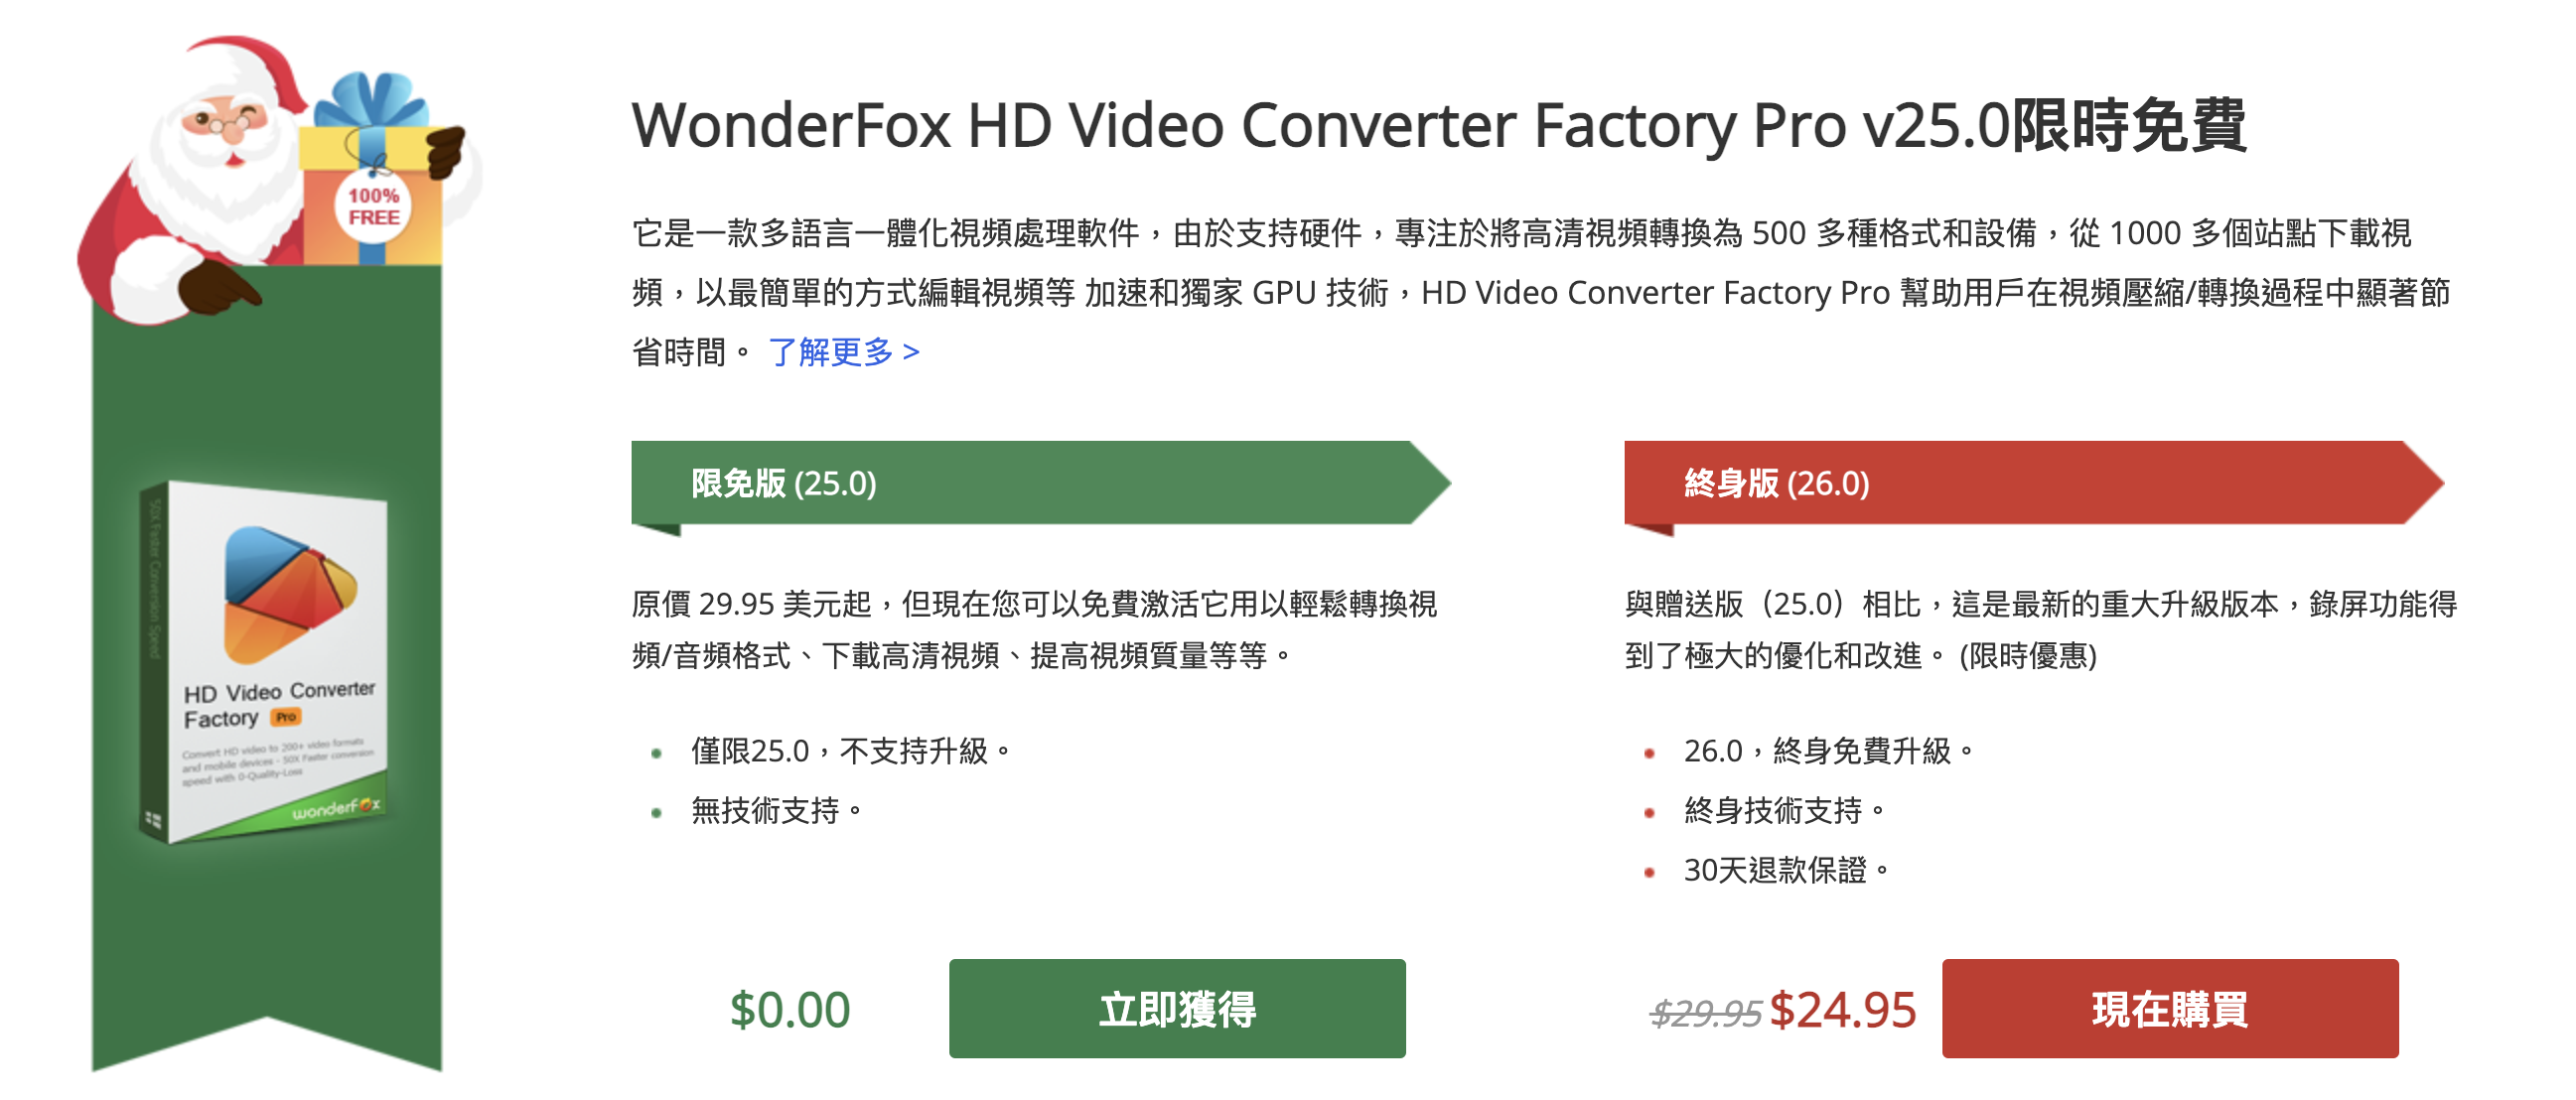 WonderFox 限時免費送 HD Video Converter Factory Pro v25.0